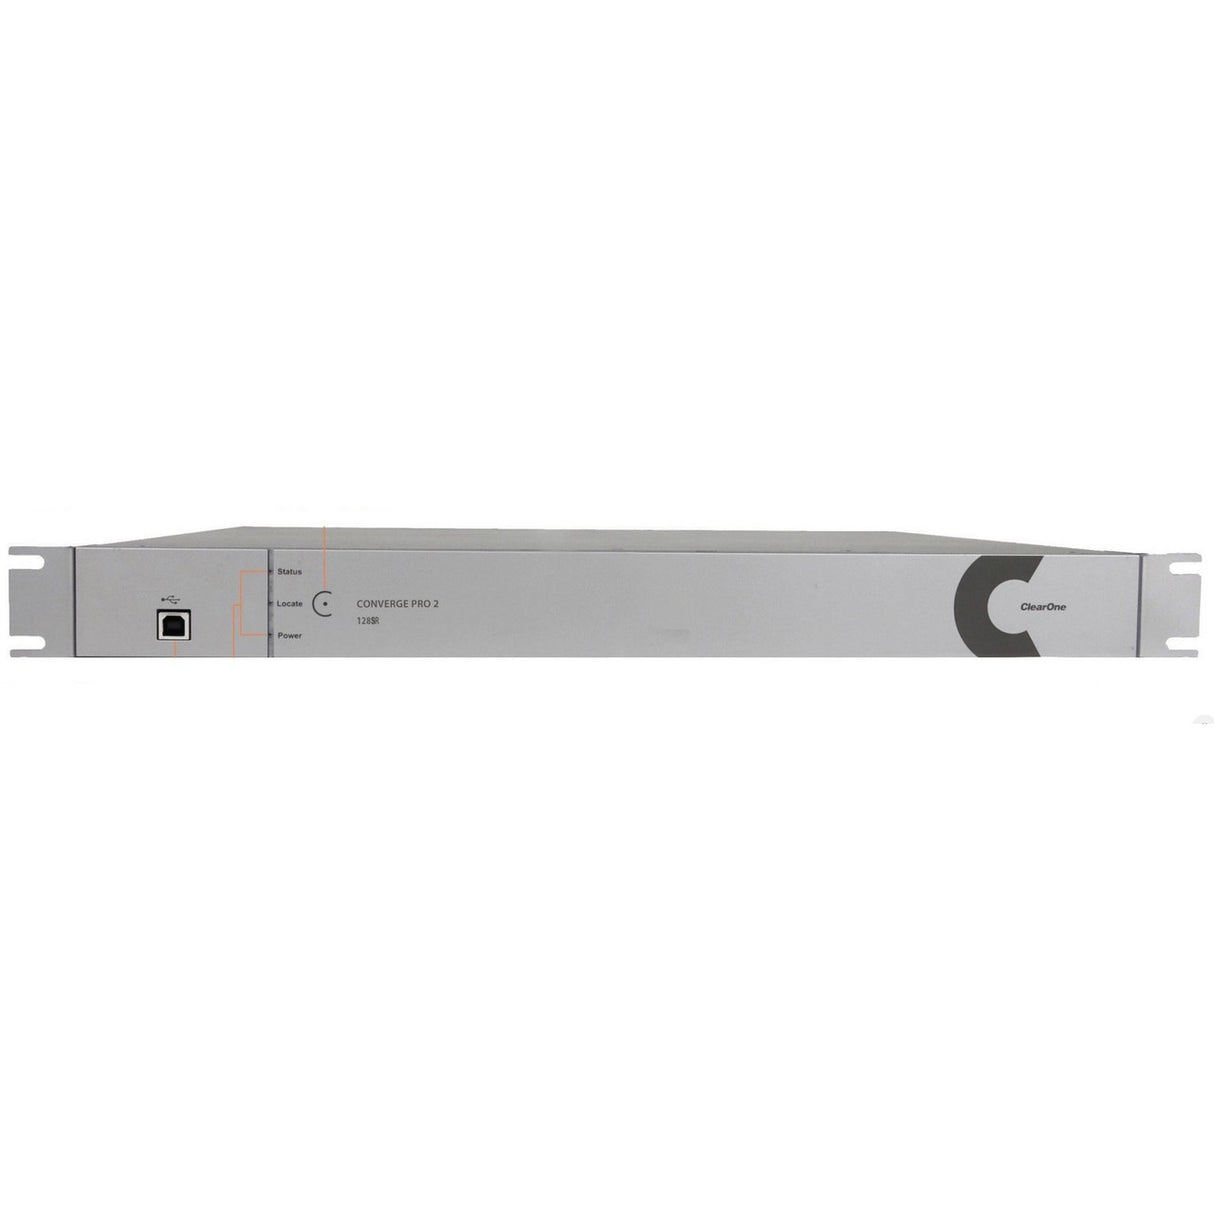 Clearone 910-3200-101 | Converge Pro 2 128SR Sound Reinforcement DSP Mixer